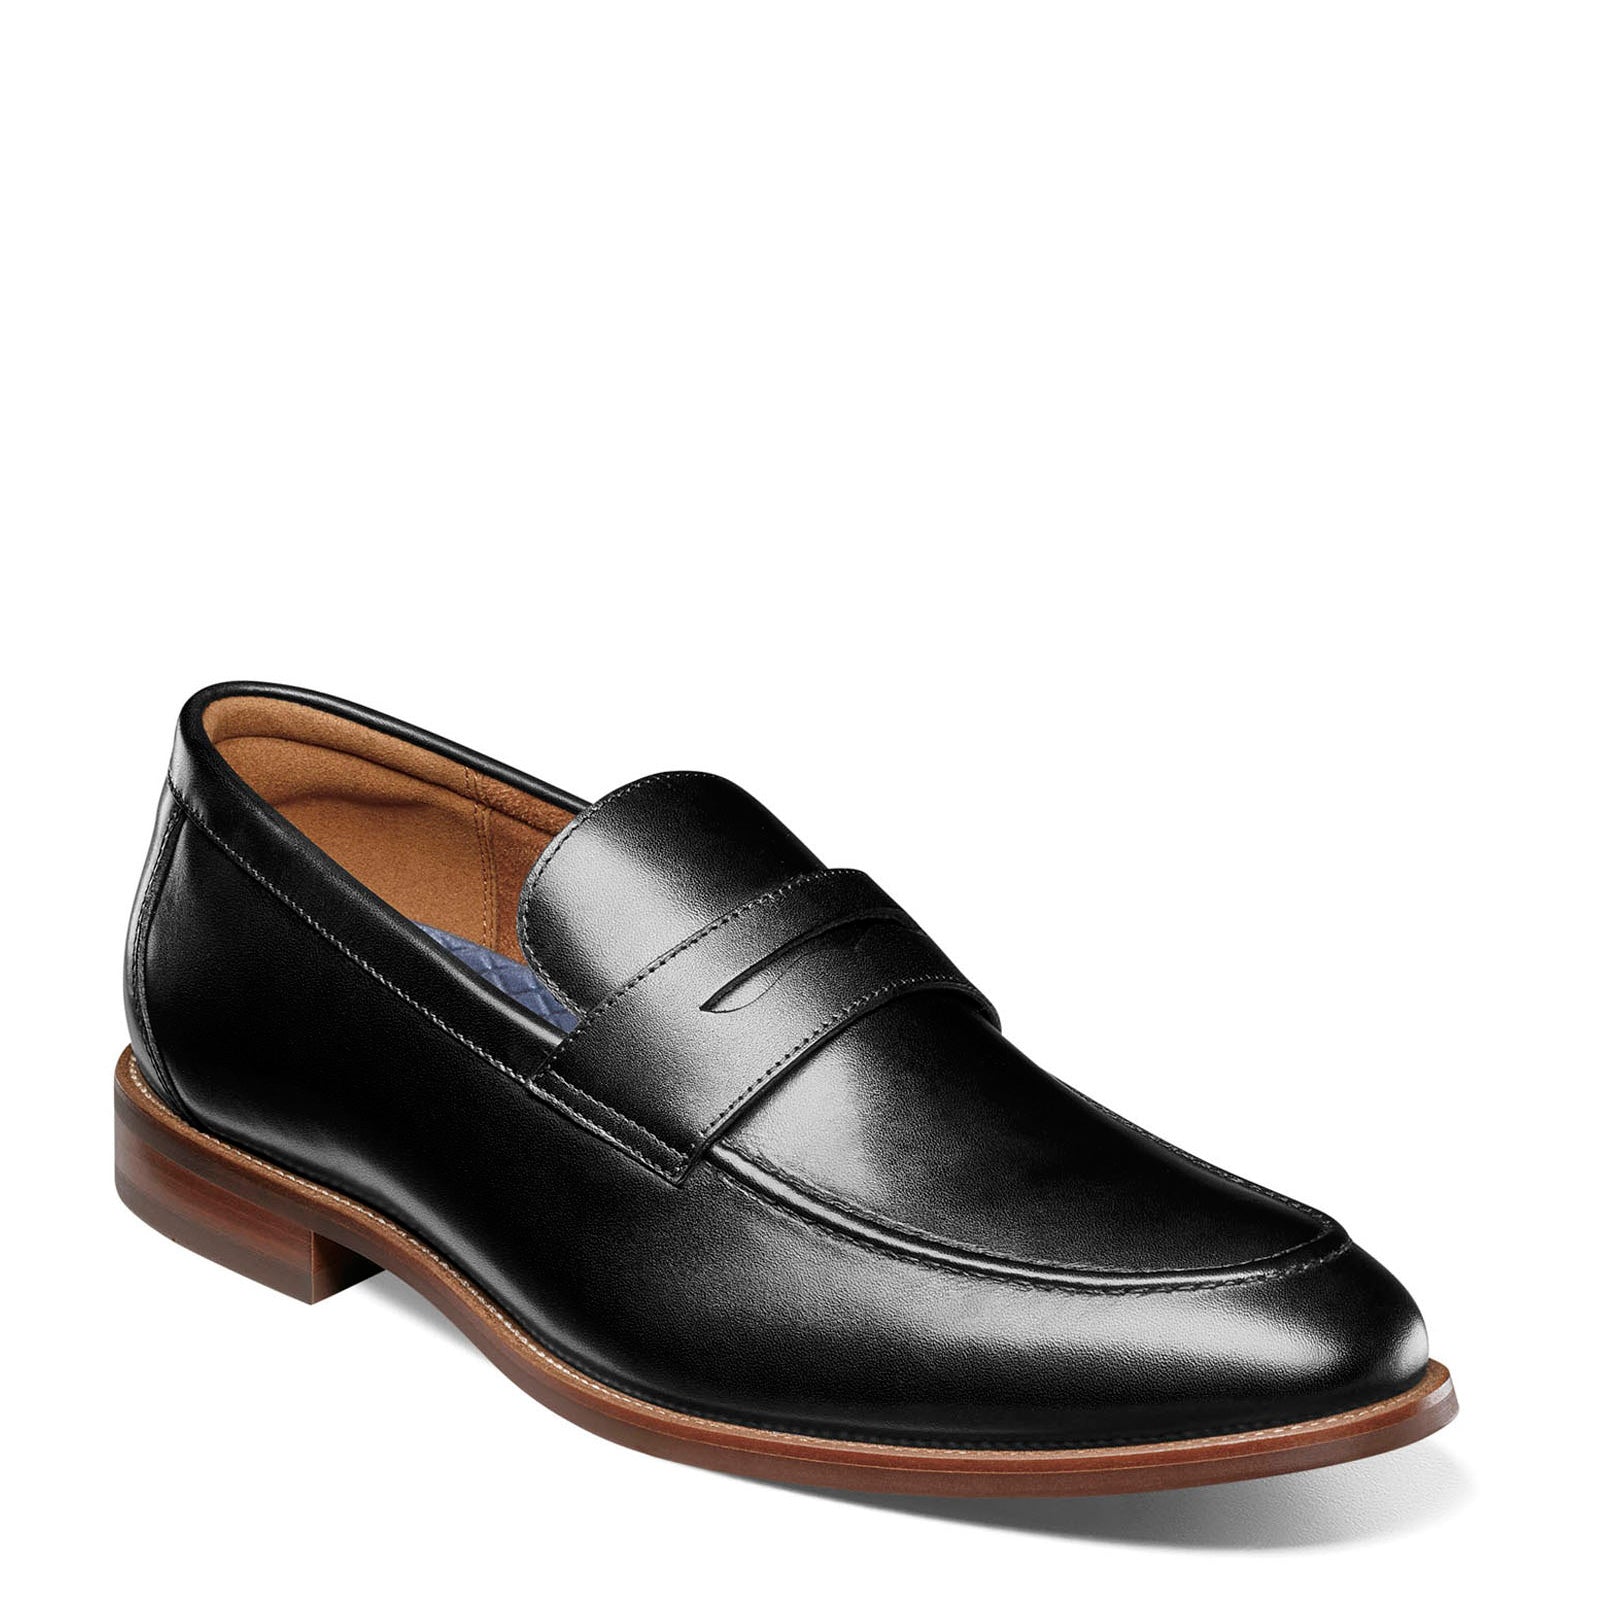 Men's Florsheim Vibe Wingtip Oxford Shoes in Black Size 10